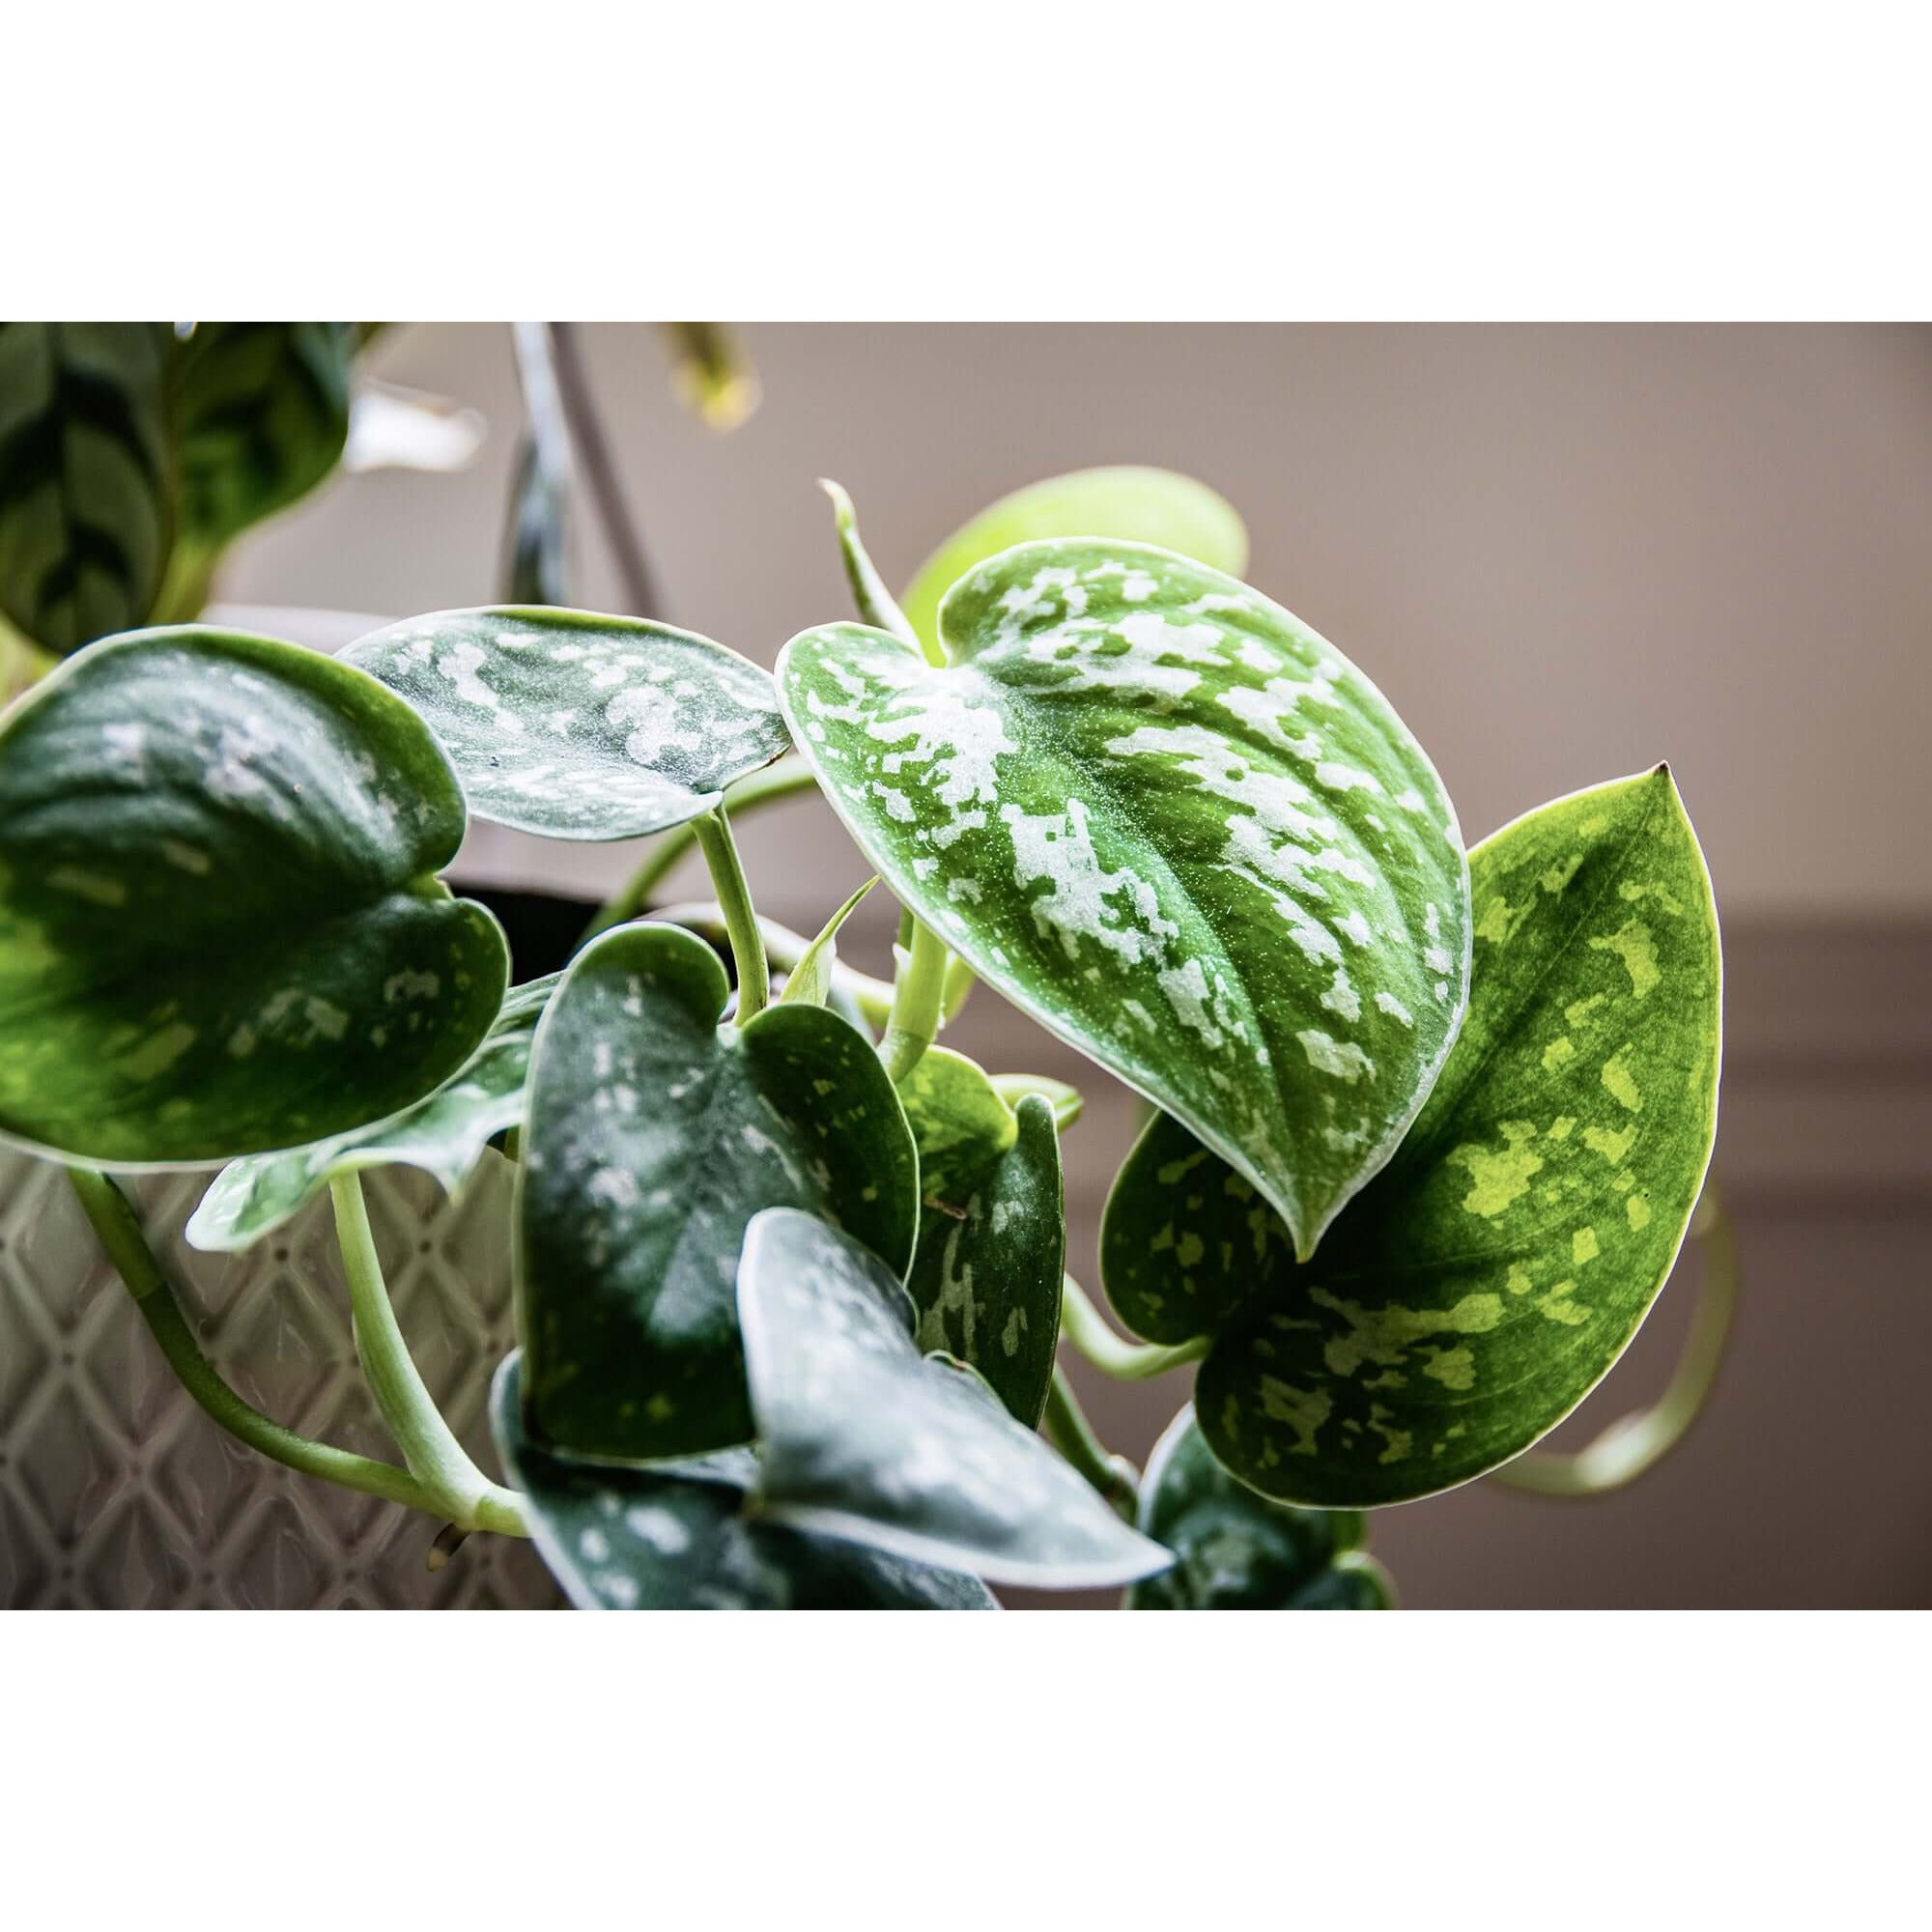 Satin Pothos | Modern house plants that clean the air